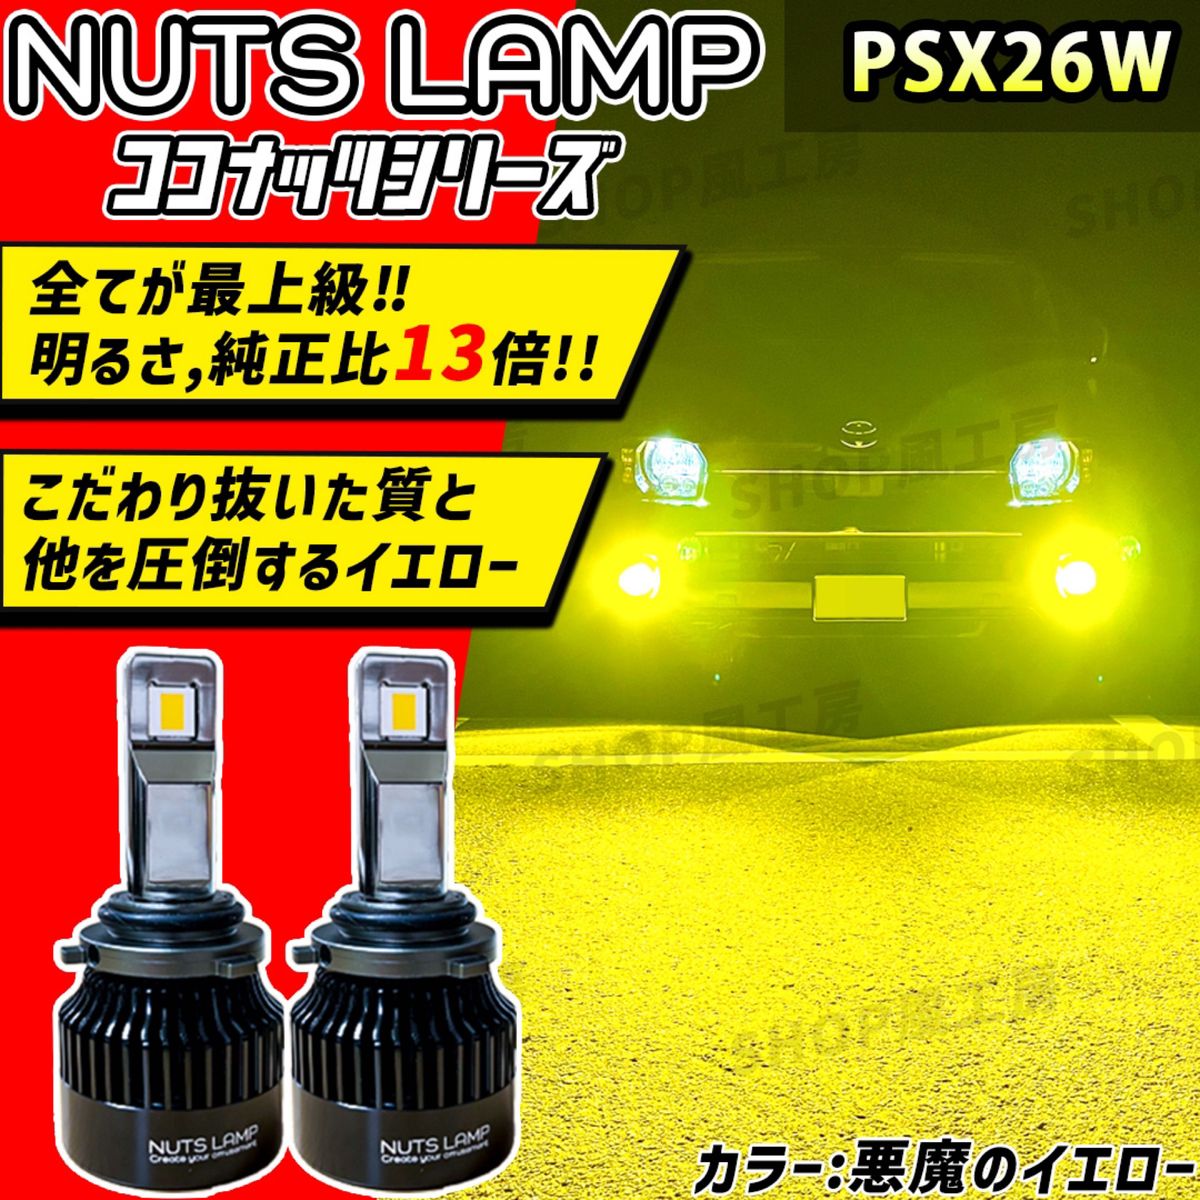 NUTSLAMP 車 ライト フォグライト フォグランプ PSX26W LED イエロー ハイエース HID超え 超明るい 黄色